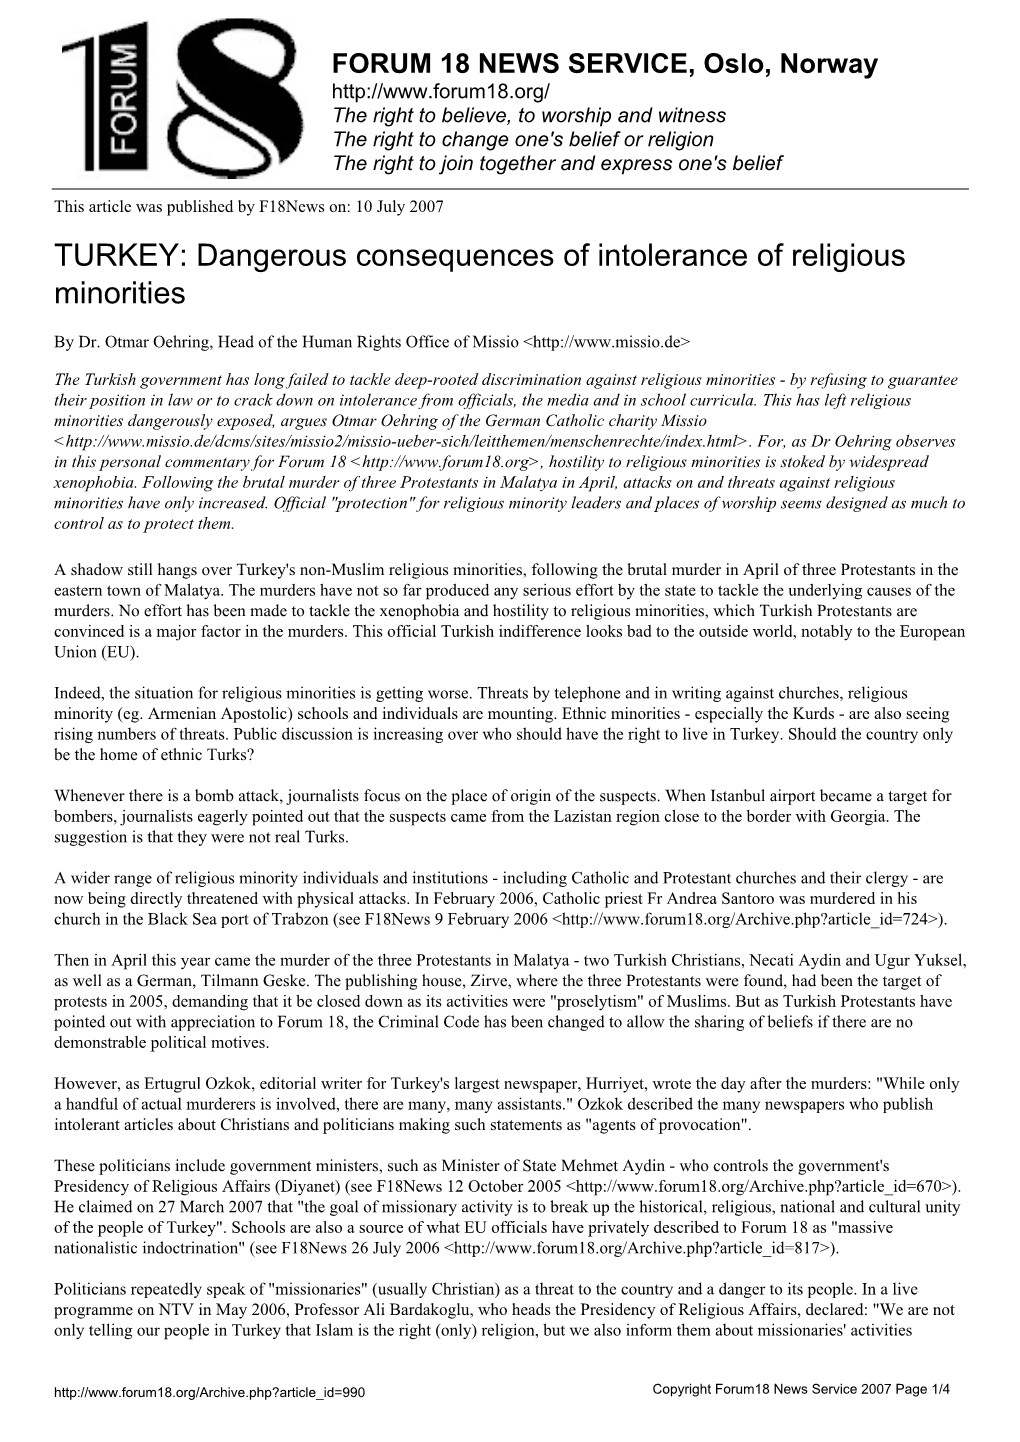 TURKEY: Dangerous Consequences of Intolerance of Religious Minorities